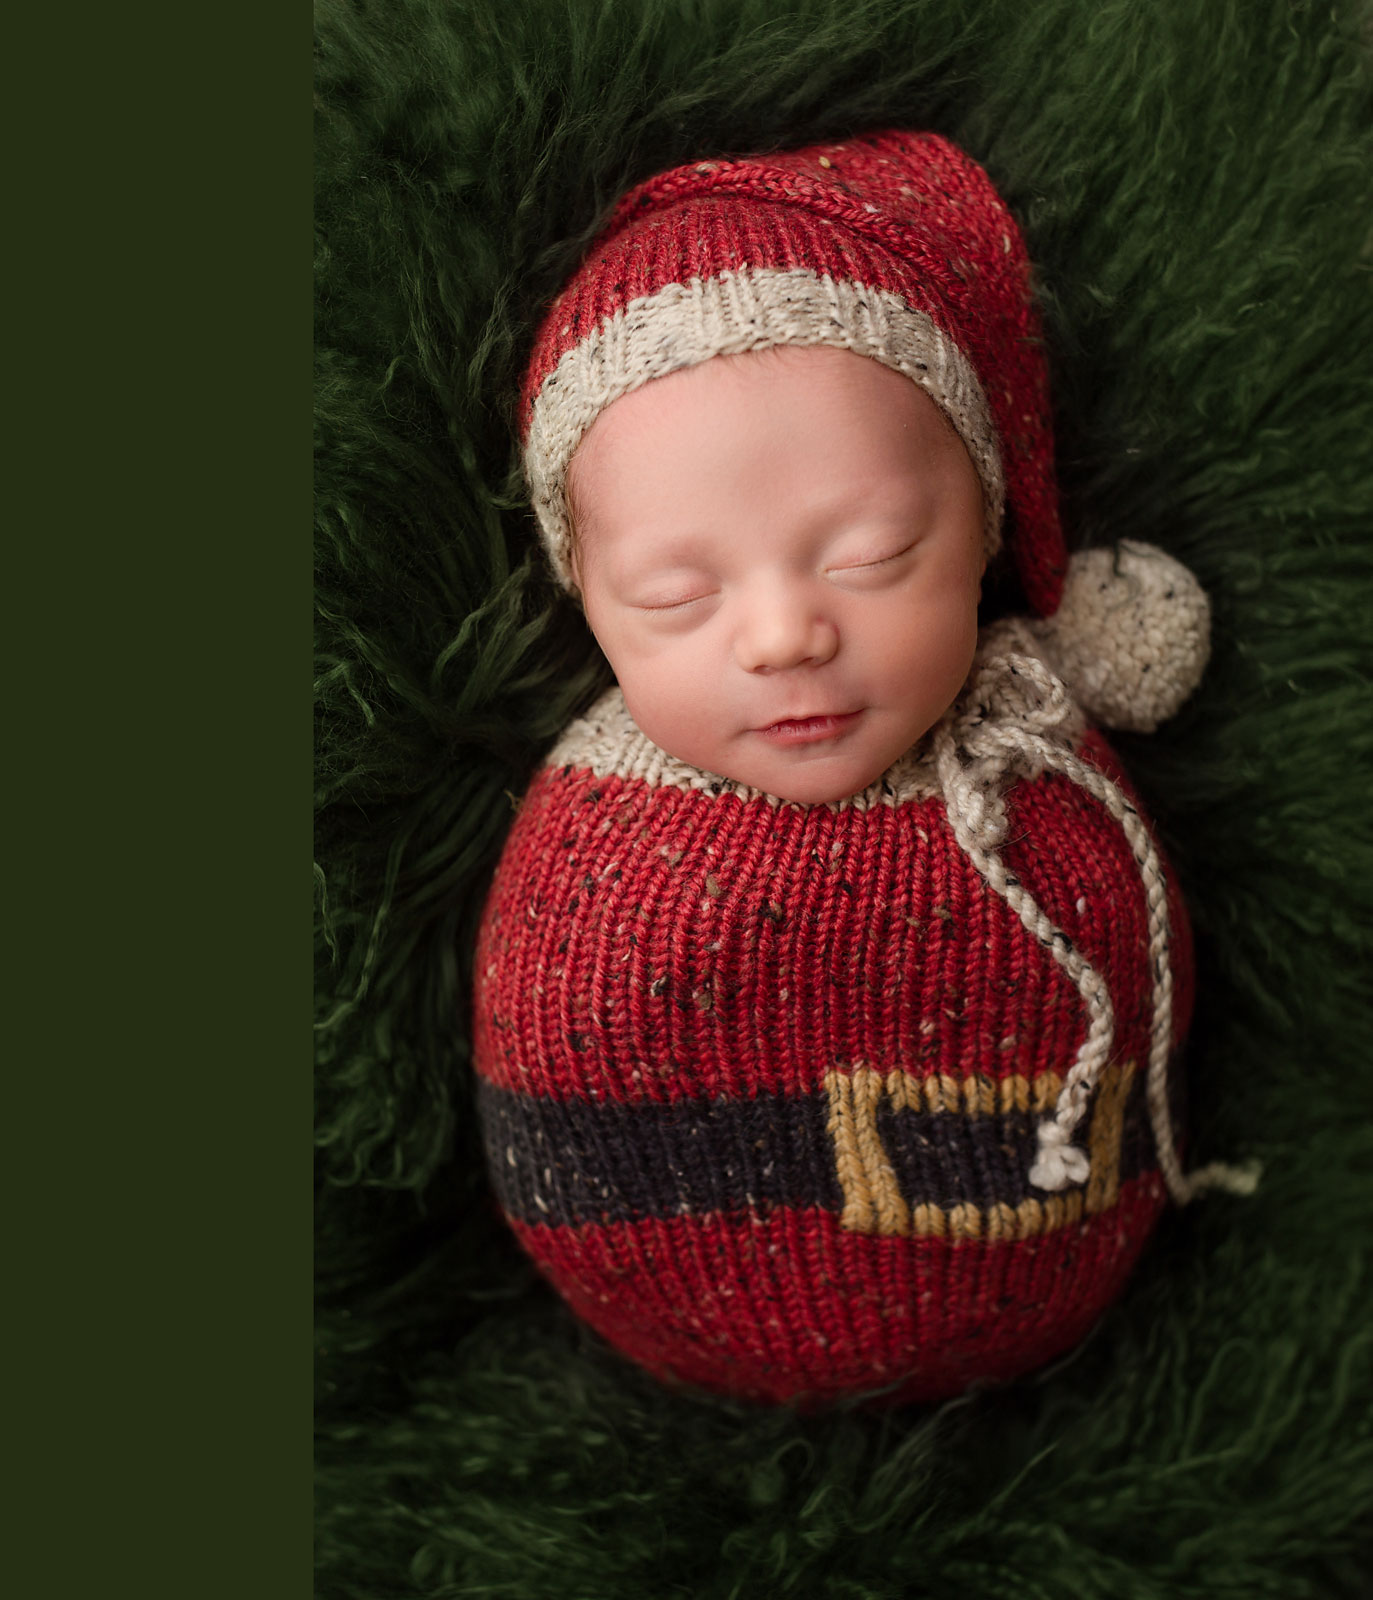 newborn baby dressed like a santa